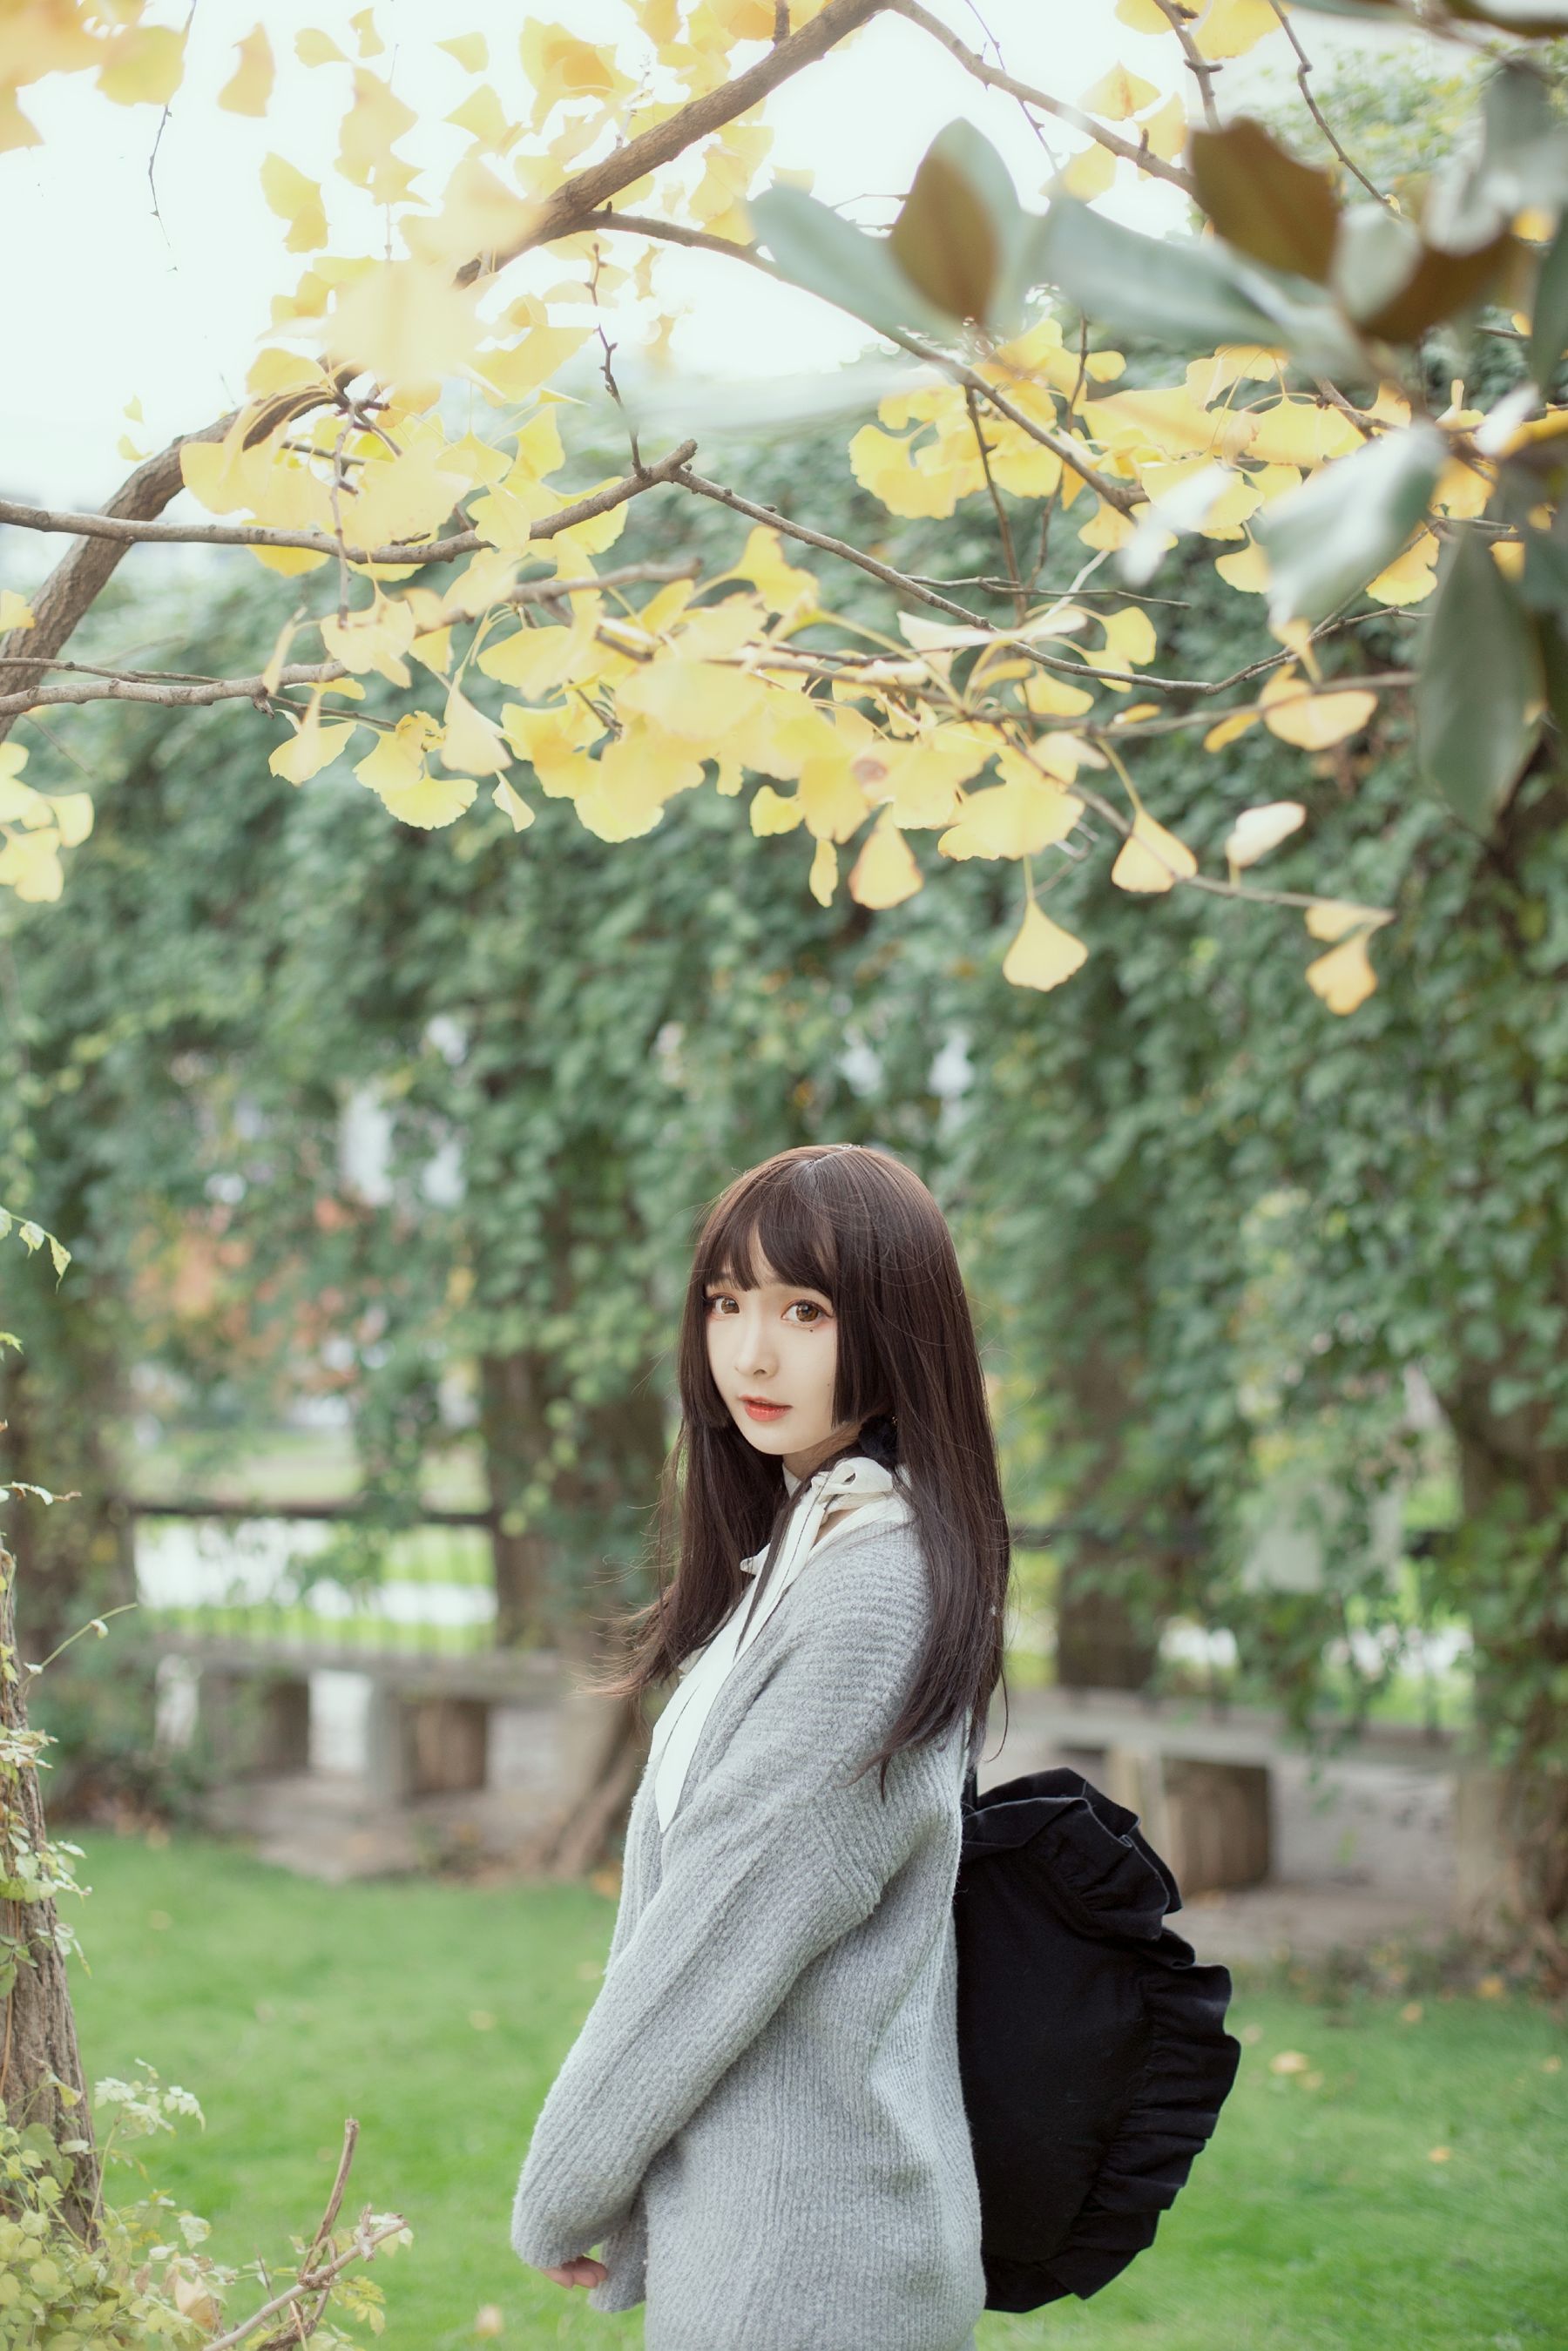 [Cosplay写真] 二次元美女古川kagura - 银杏树下  第17张